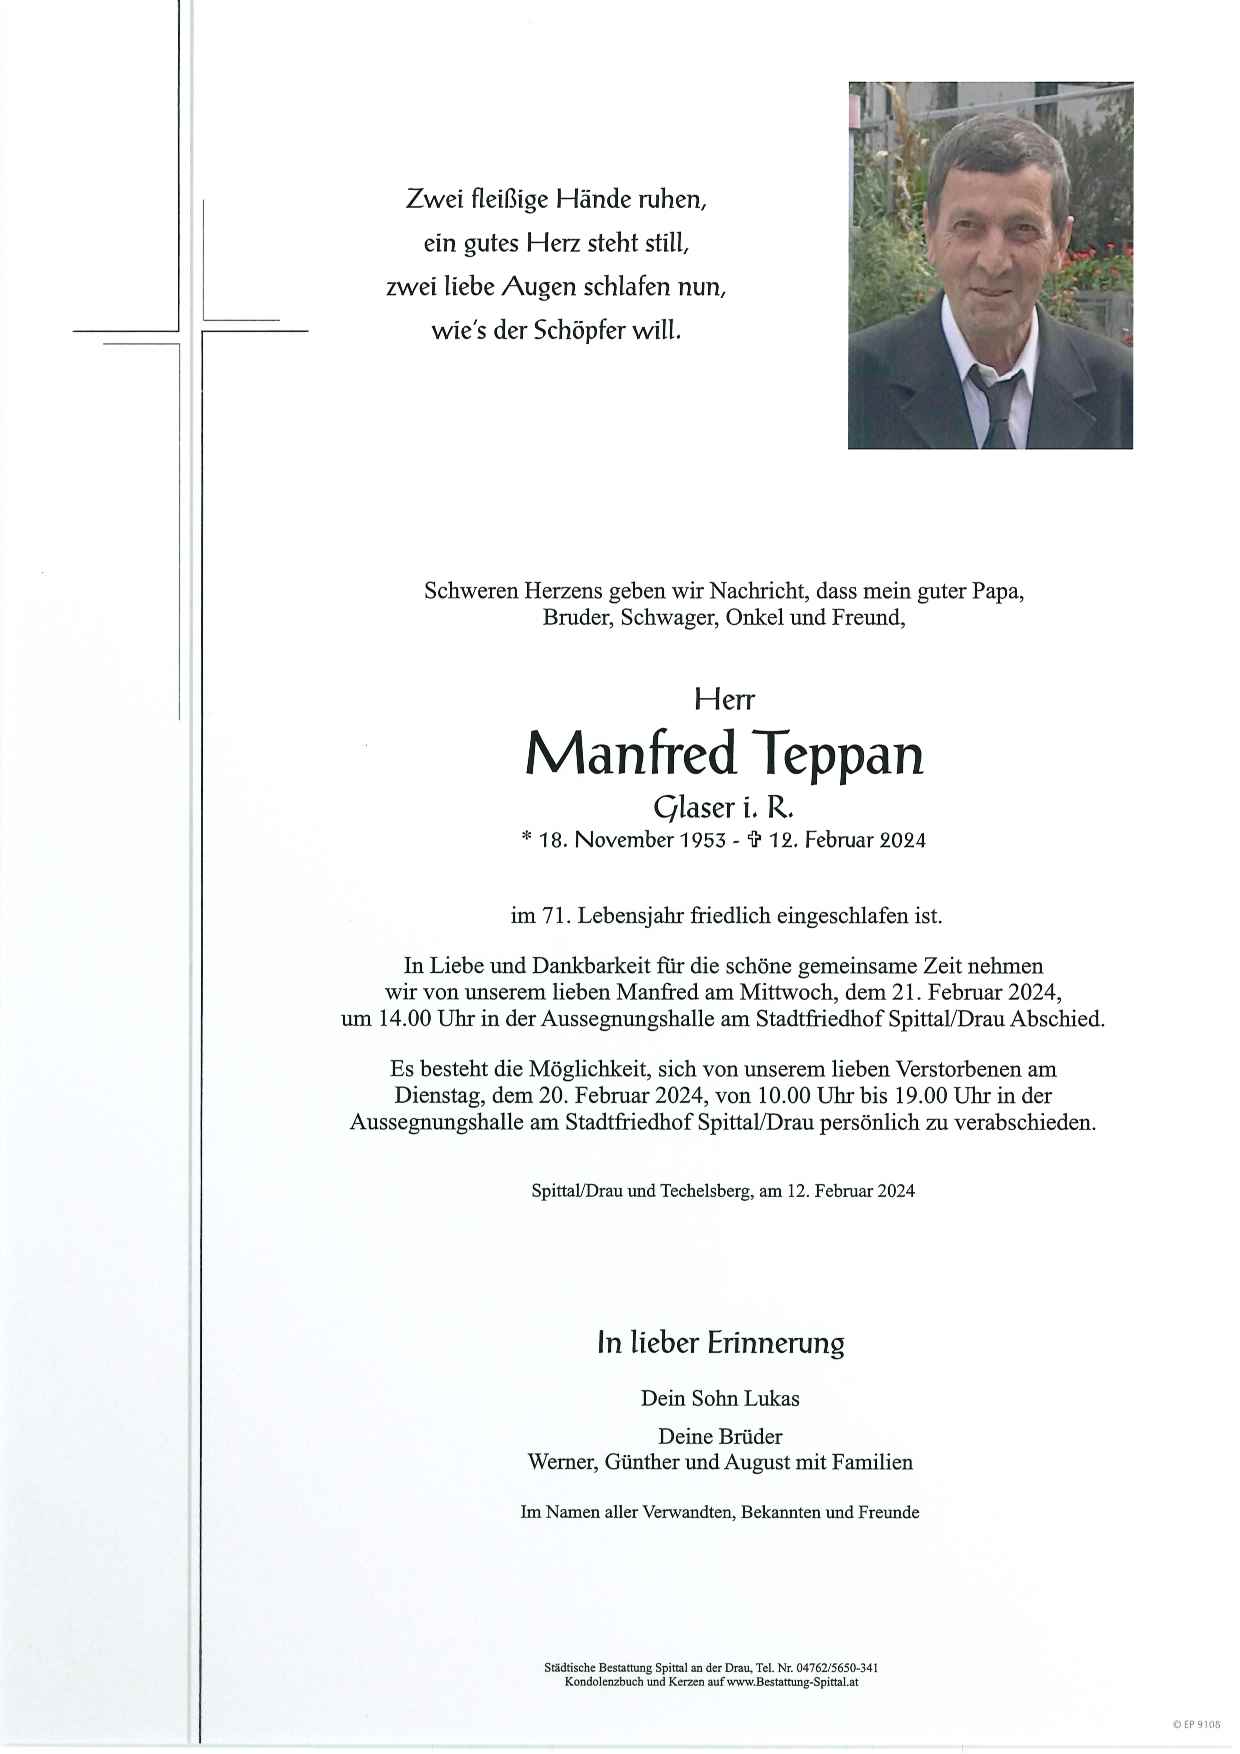 Manfred Teppan